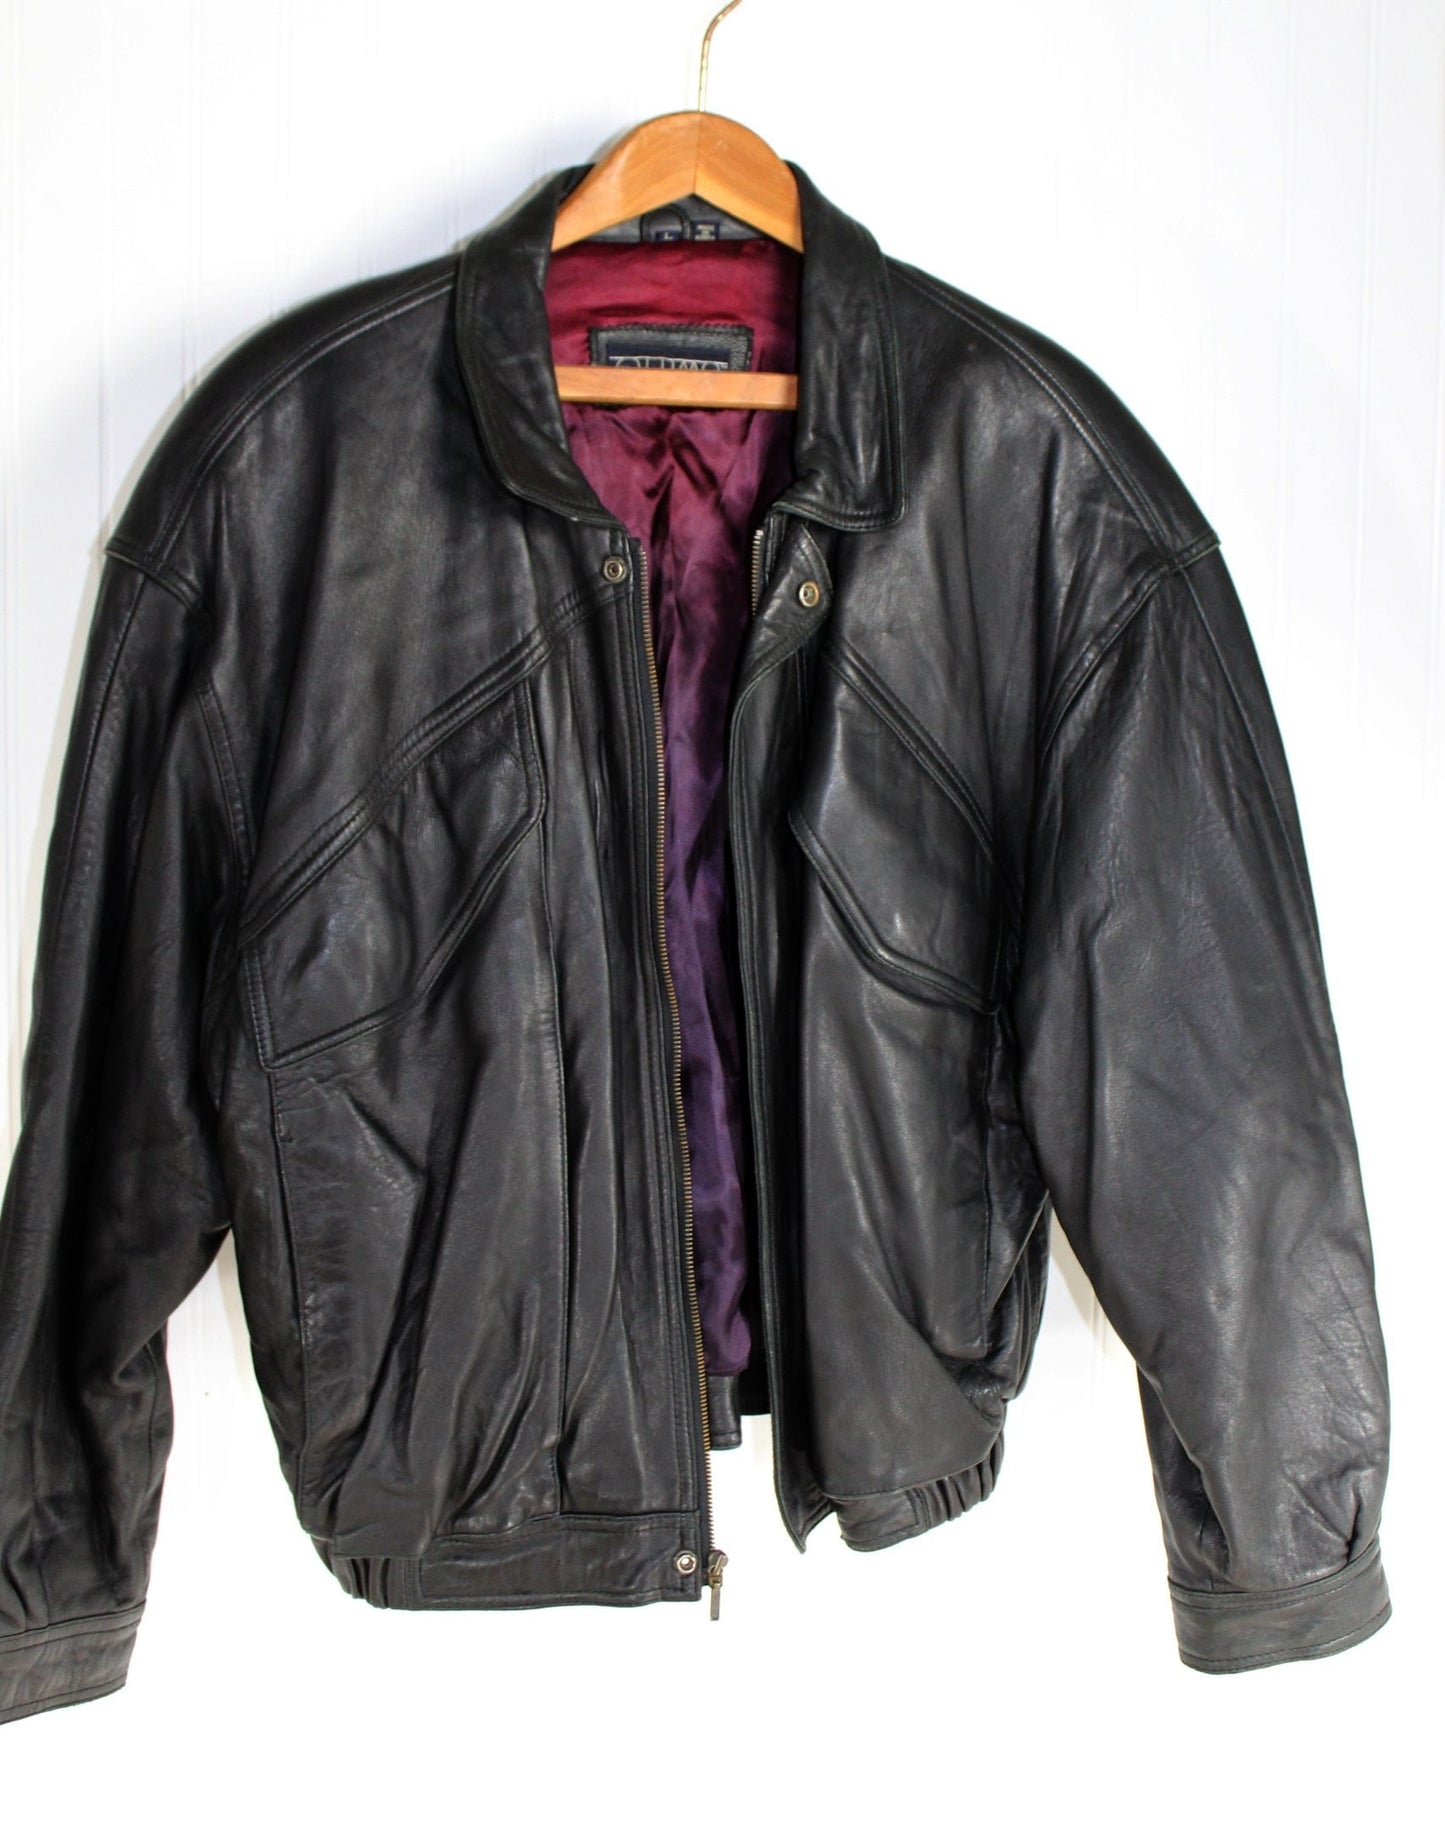 Ottimo Leather Black Bomber Jacket L Vintage - Soft Supple Warm flight jacket